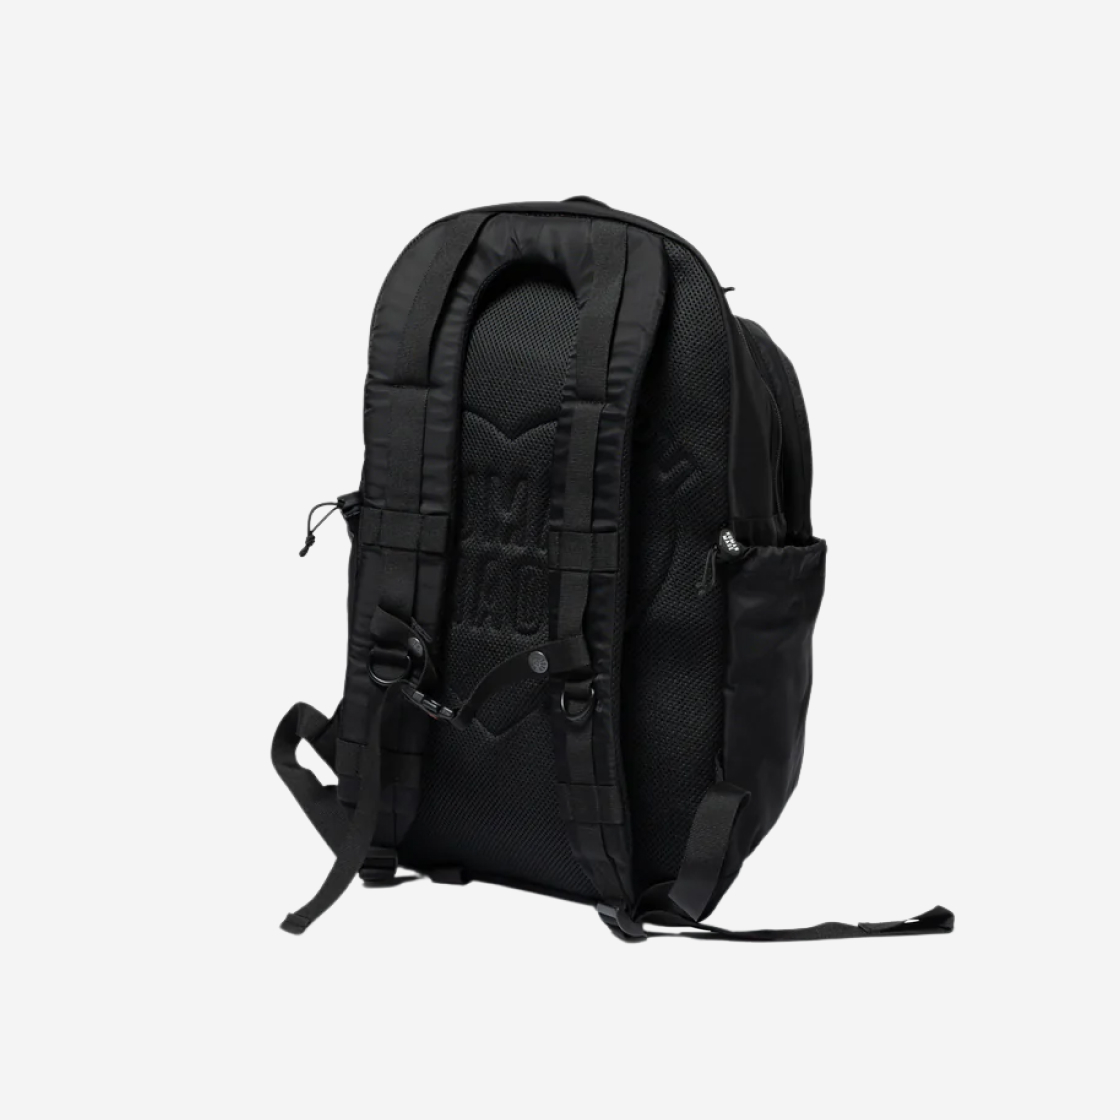 Human Made Military Backpack Black HM25GD030 | eBay